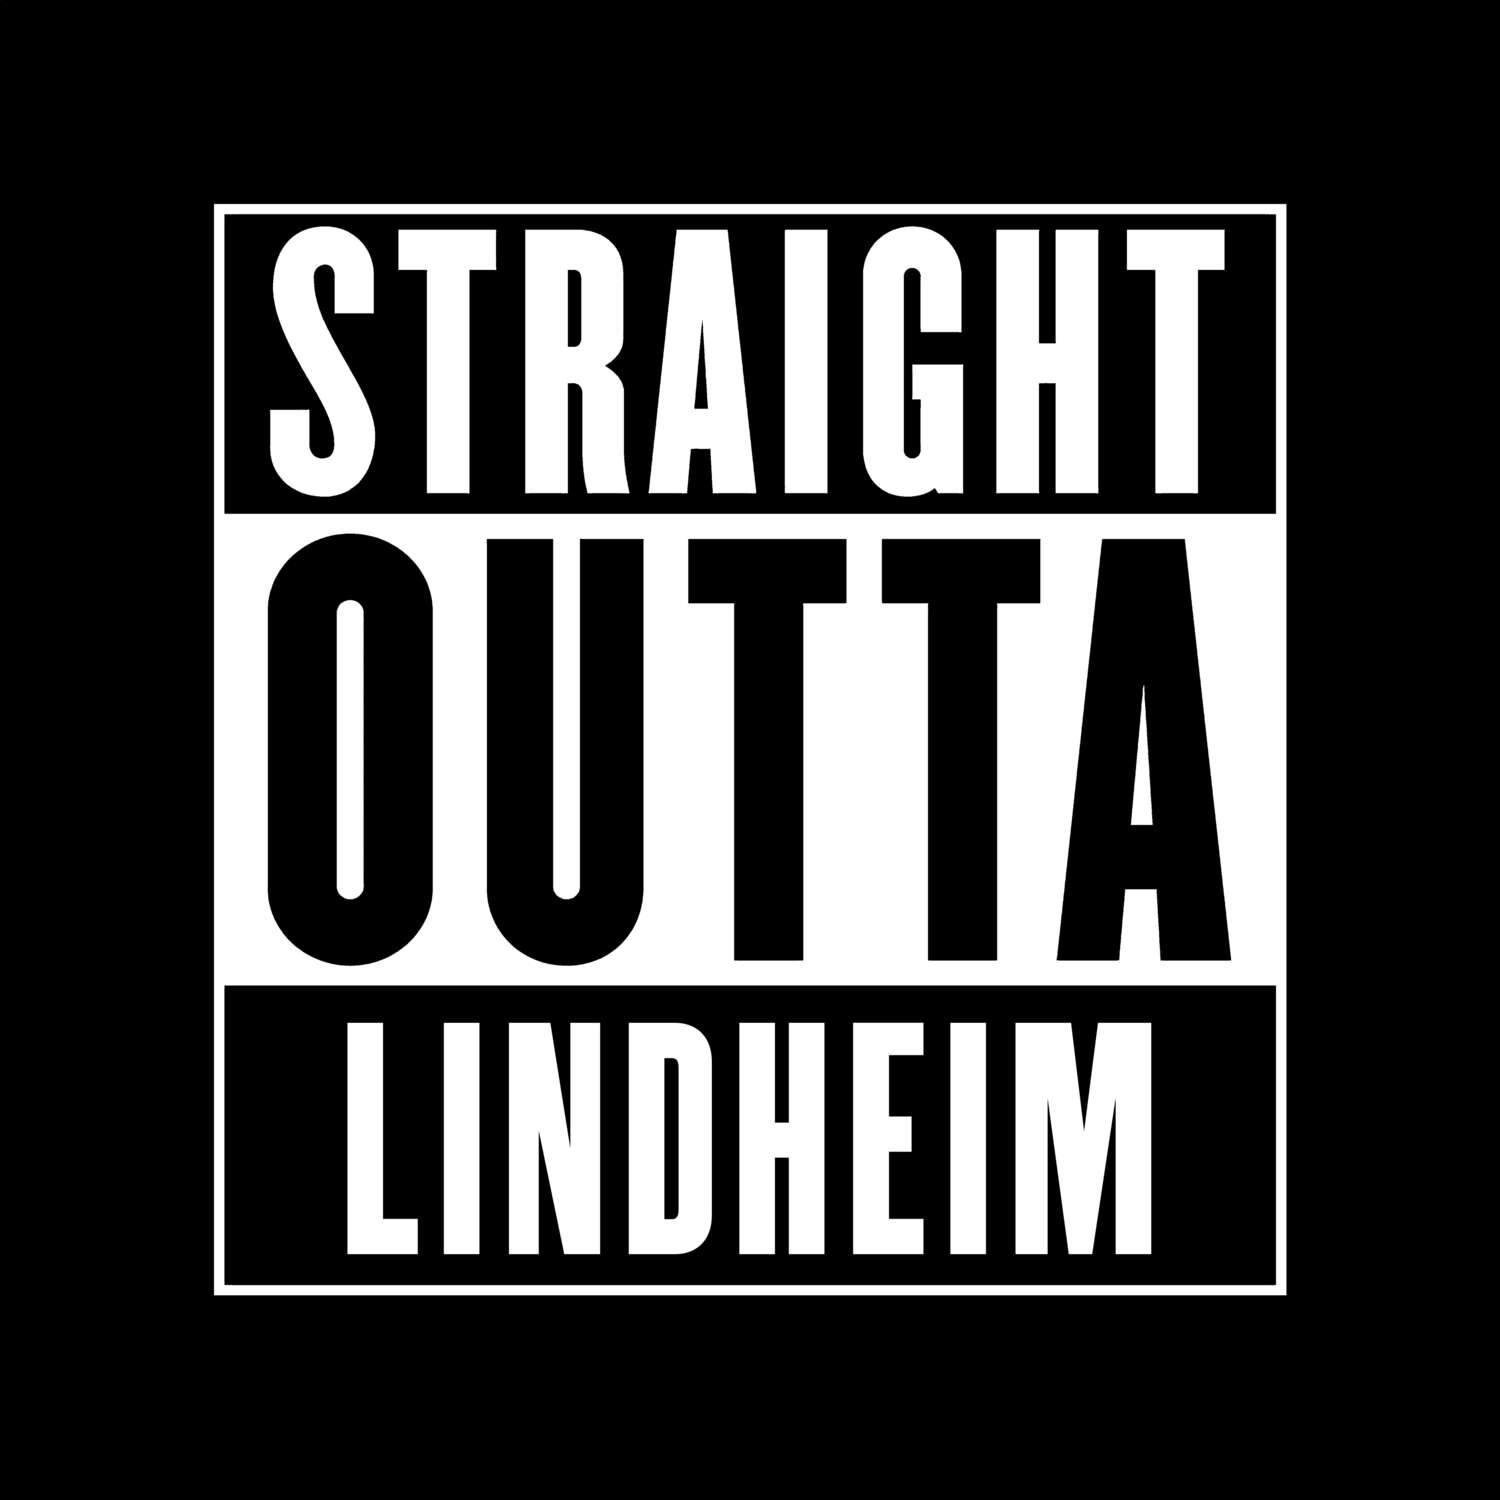 Lindheim T-Shirt »Straight Outta«